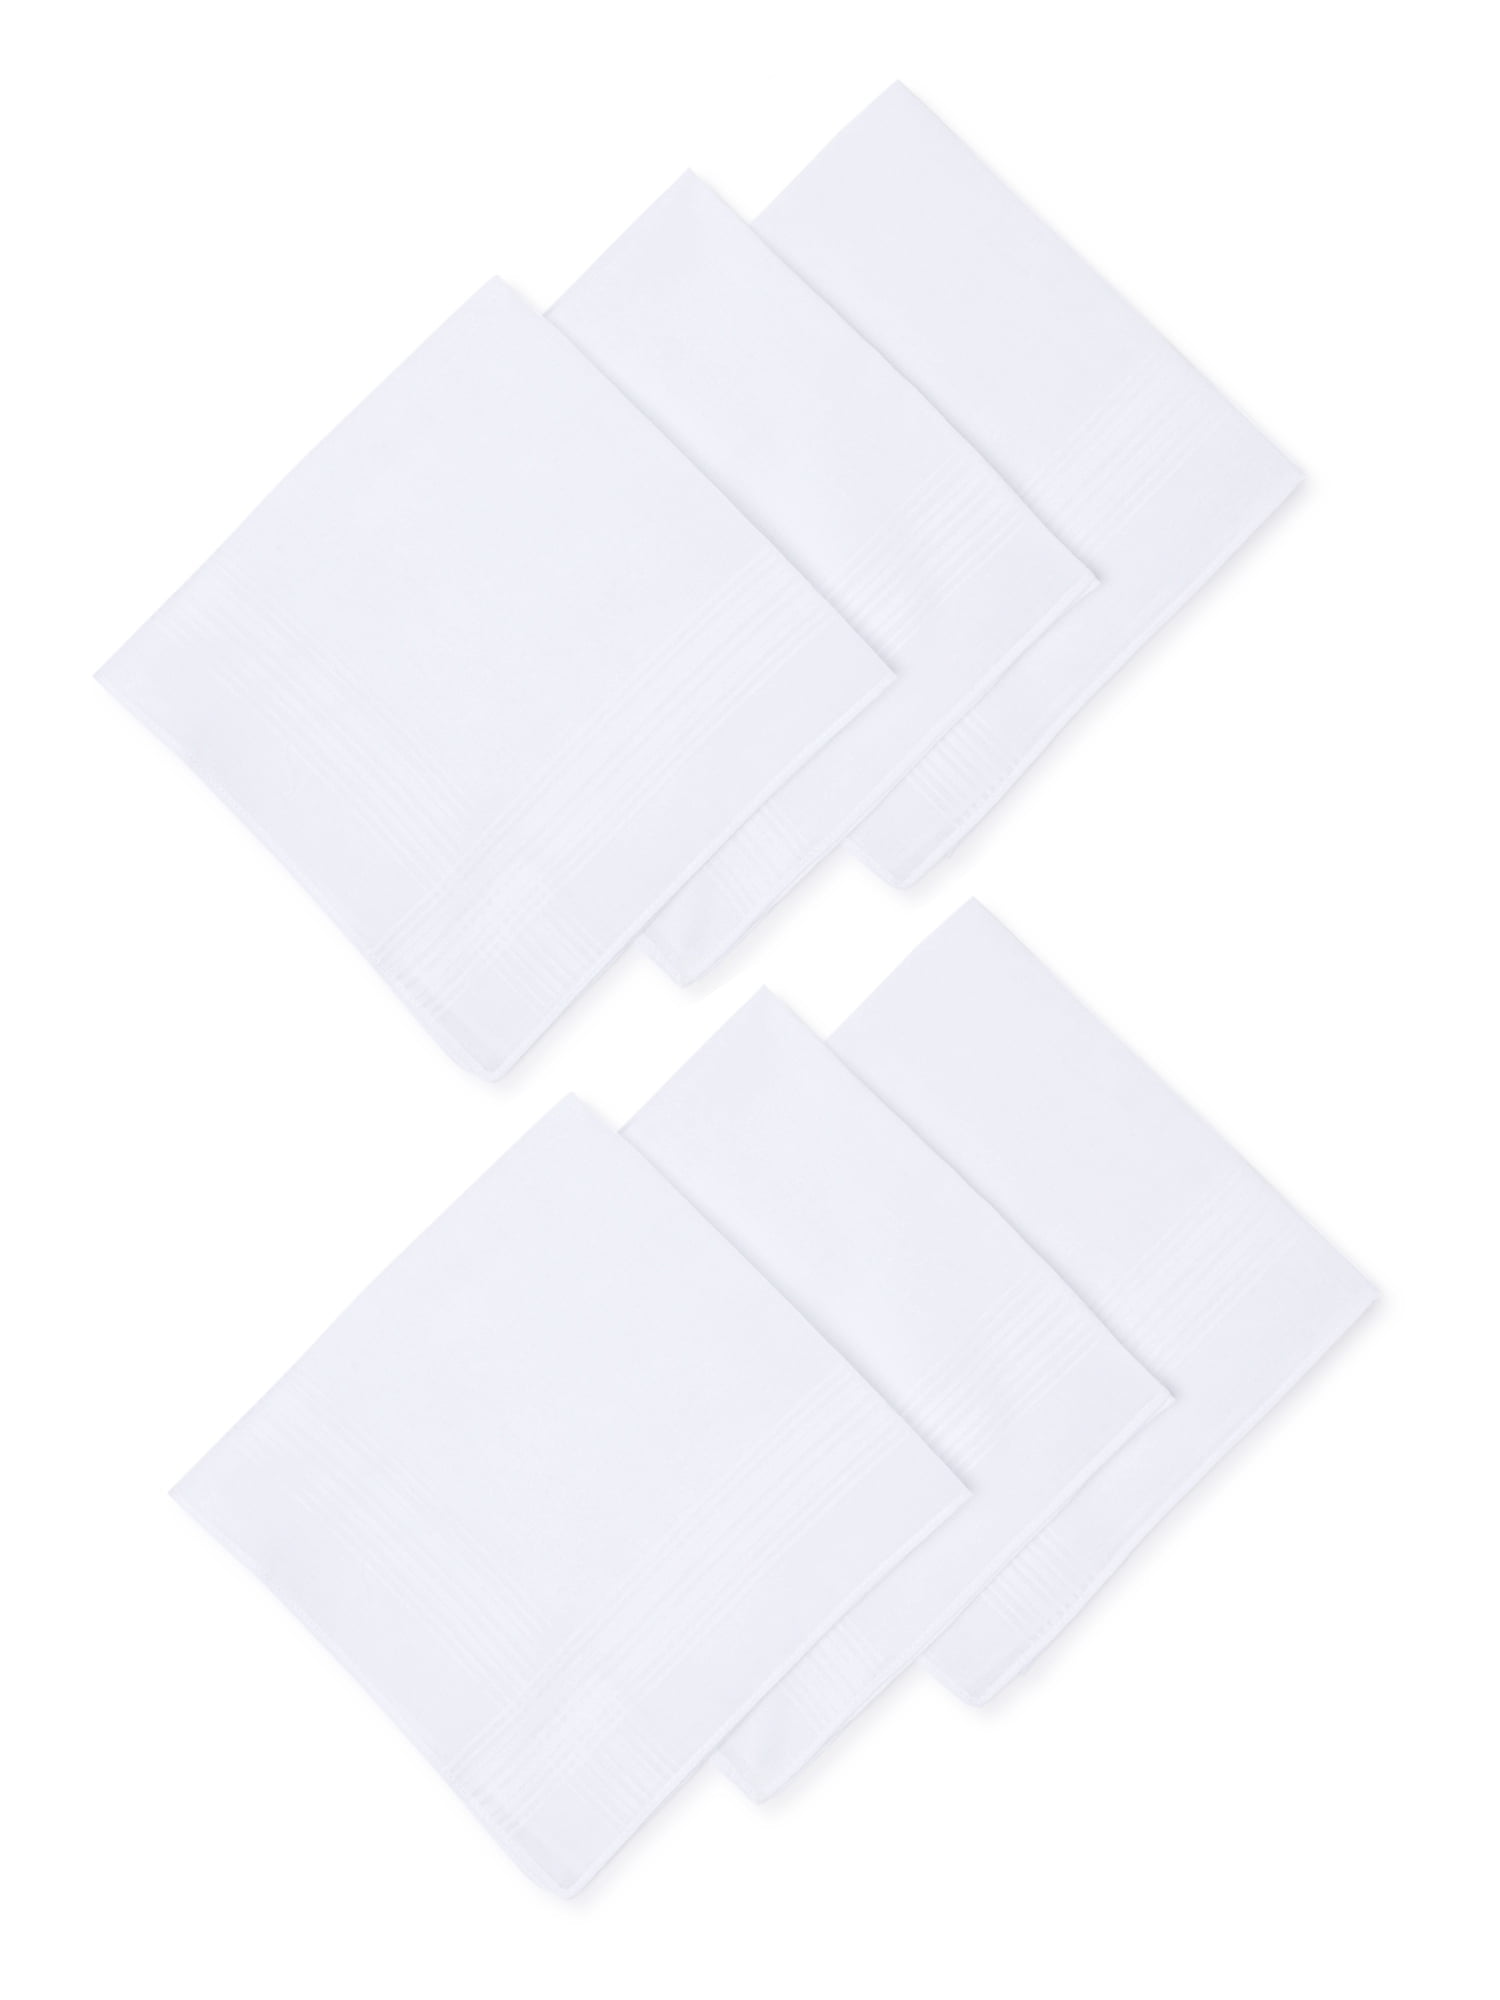 6 Men's Boxed Patterned & White Cotton 16x16 Stitched Umo Lorenzo Handkerchiefs 